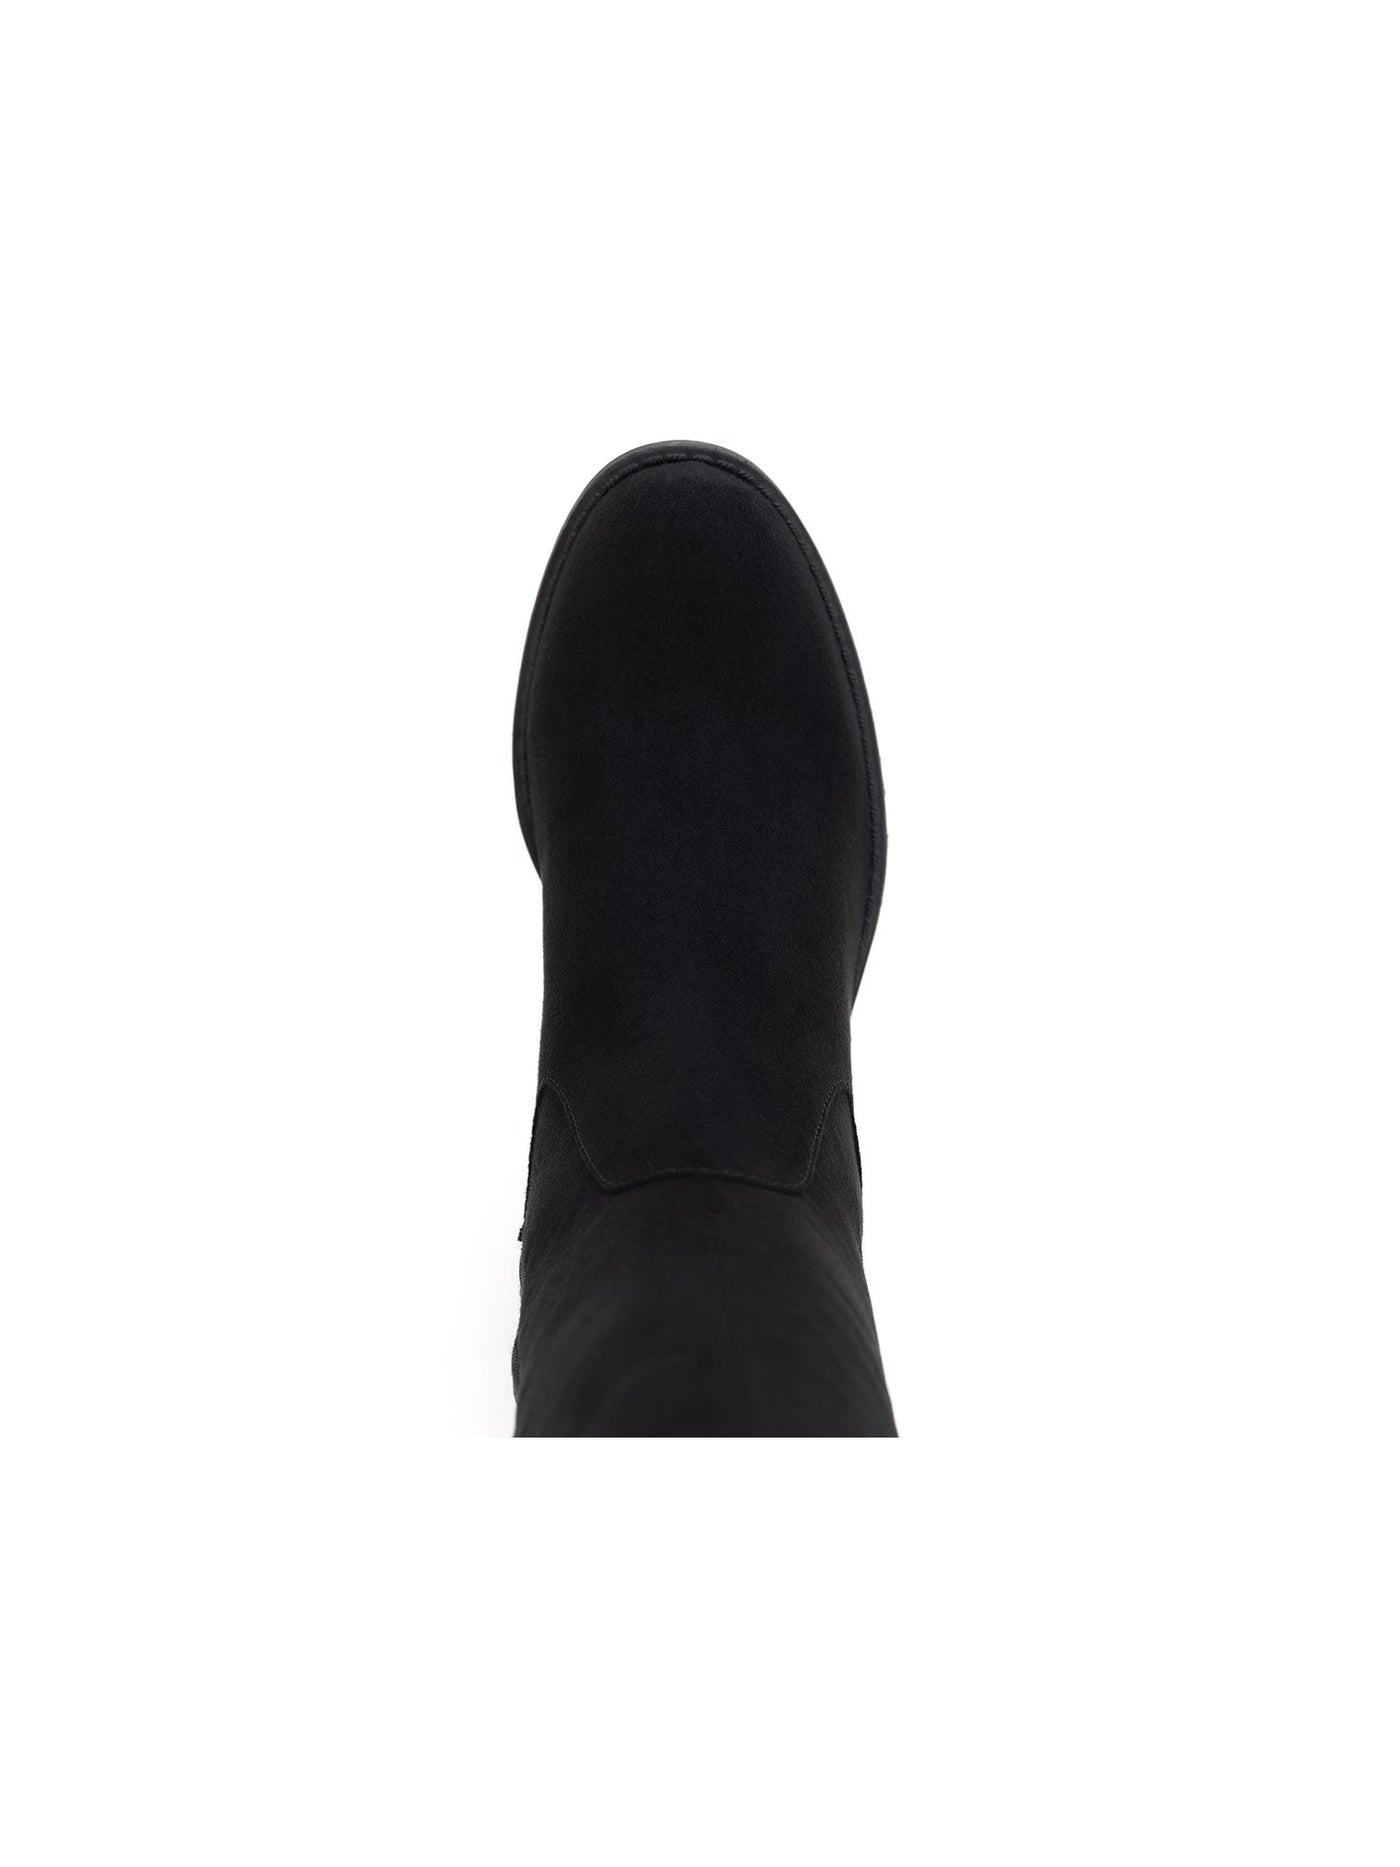 SUN STONE Womens Black Round Toe Block Heel Zip-Up Boots Shoes 5.5